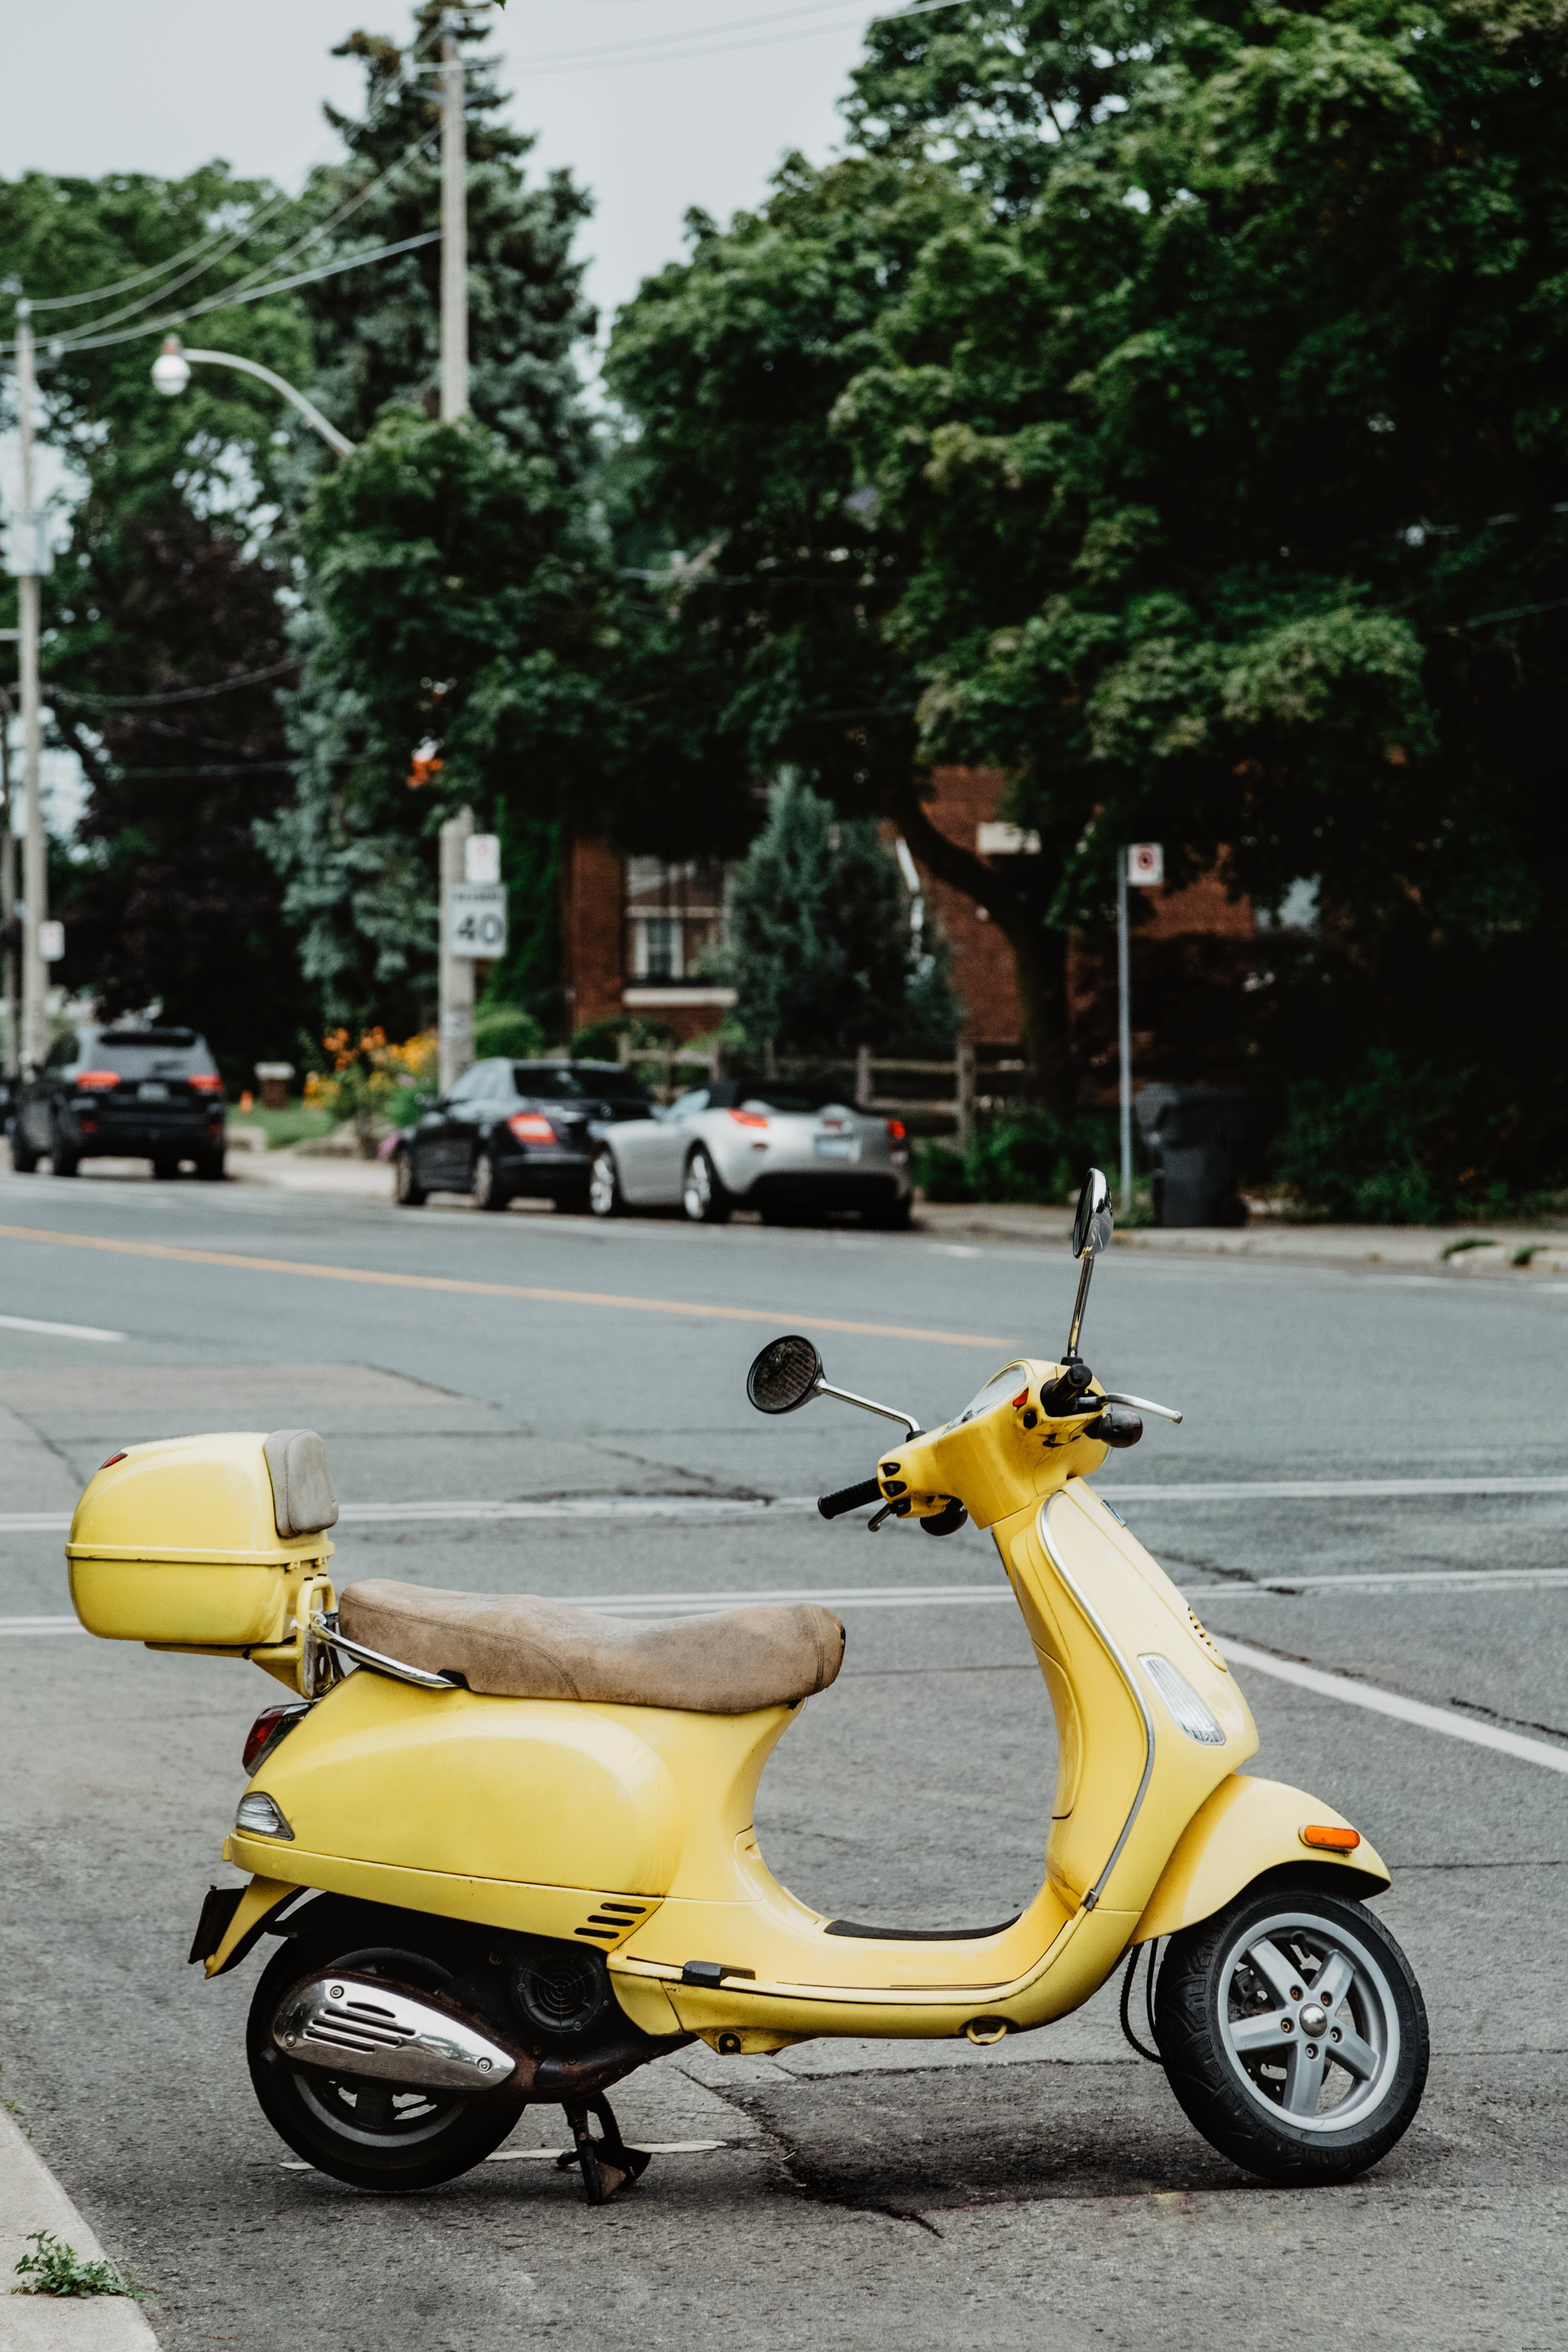 Un ciclomotore giallo estivo italiano parcheggiato su una strada foto